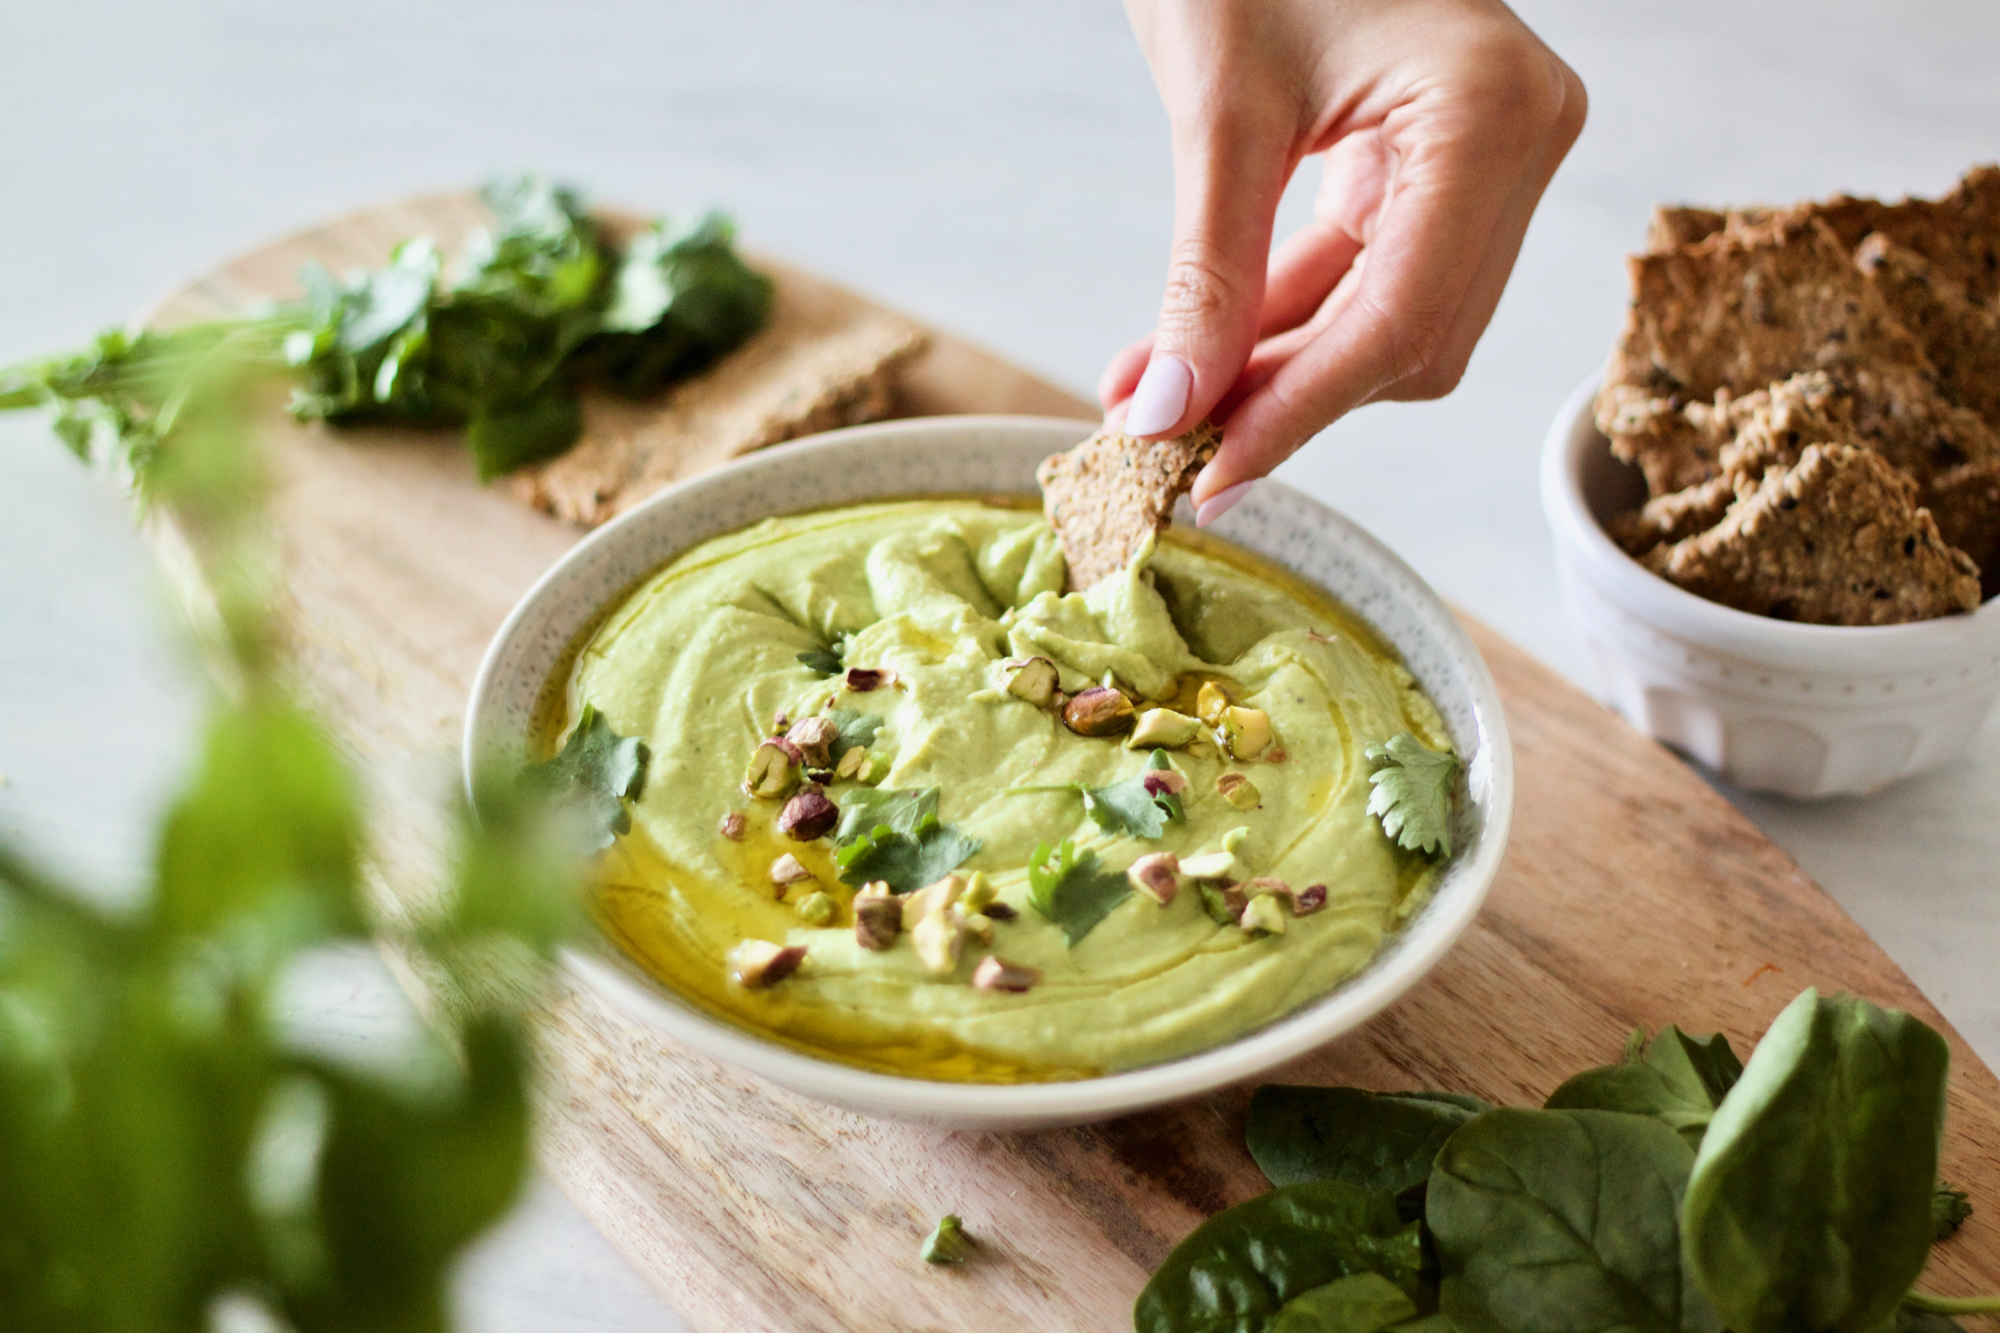 Healthy-Hummus-fresh herbs-cilantro-saudável-húmus-ervas aromáticas-coentros-2